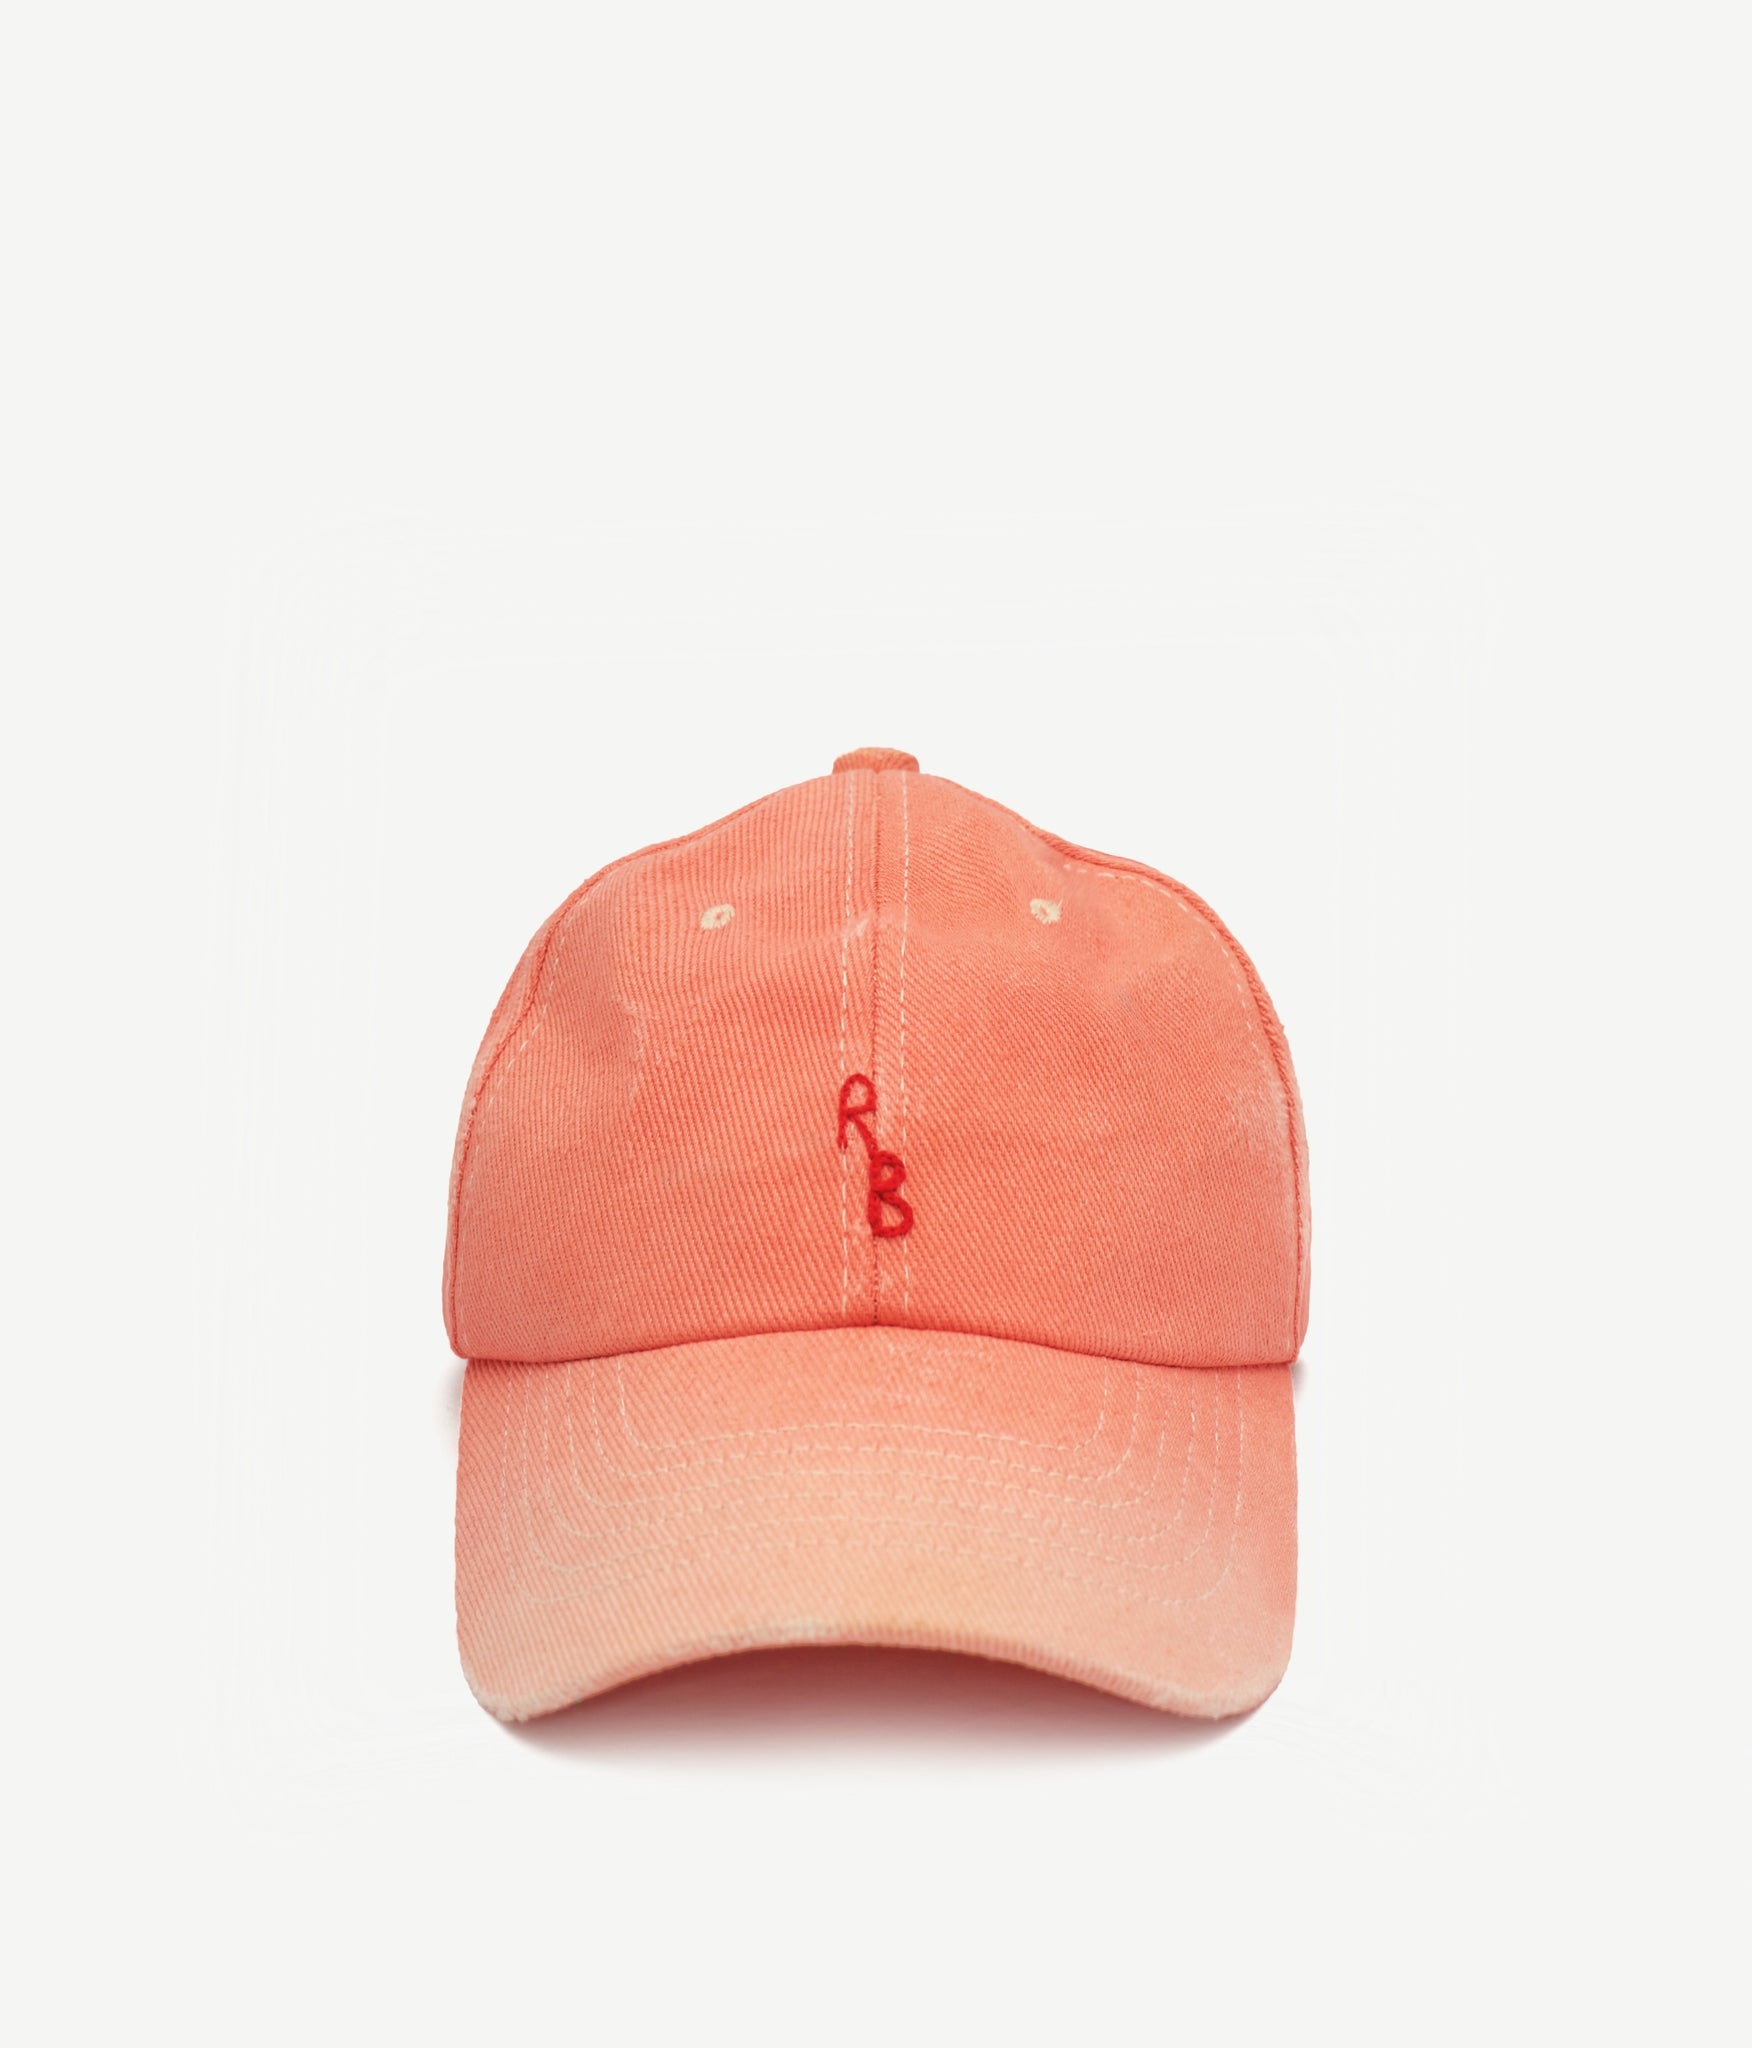 Baseball Hand-embroidered Adventure Orange Cap